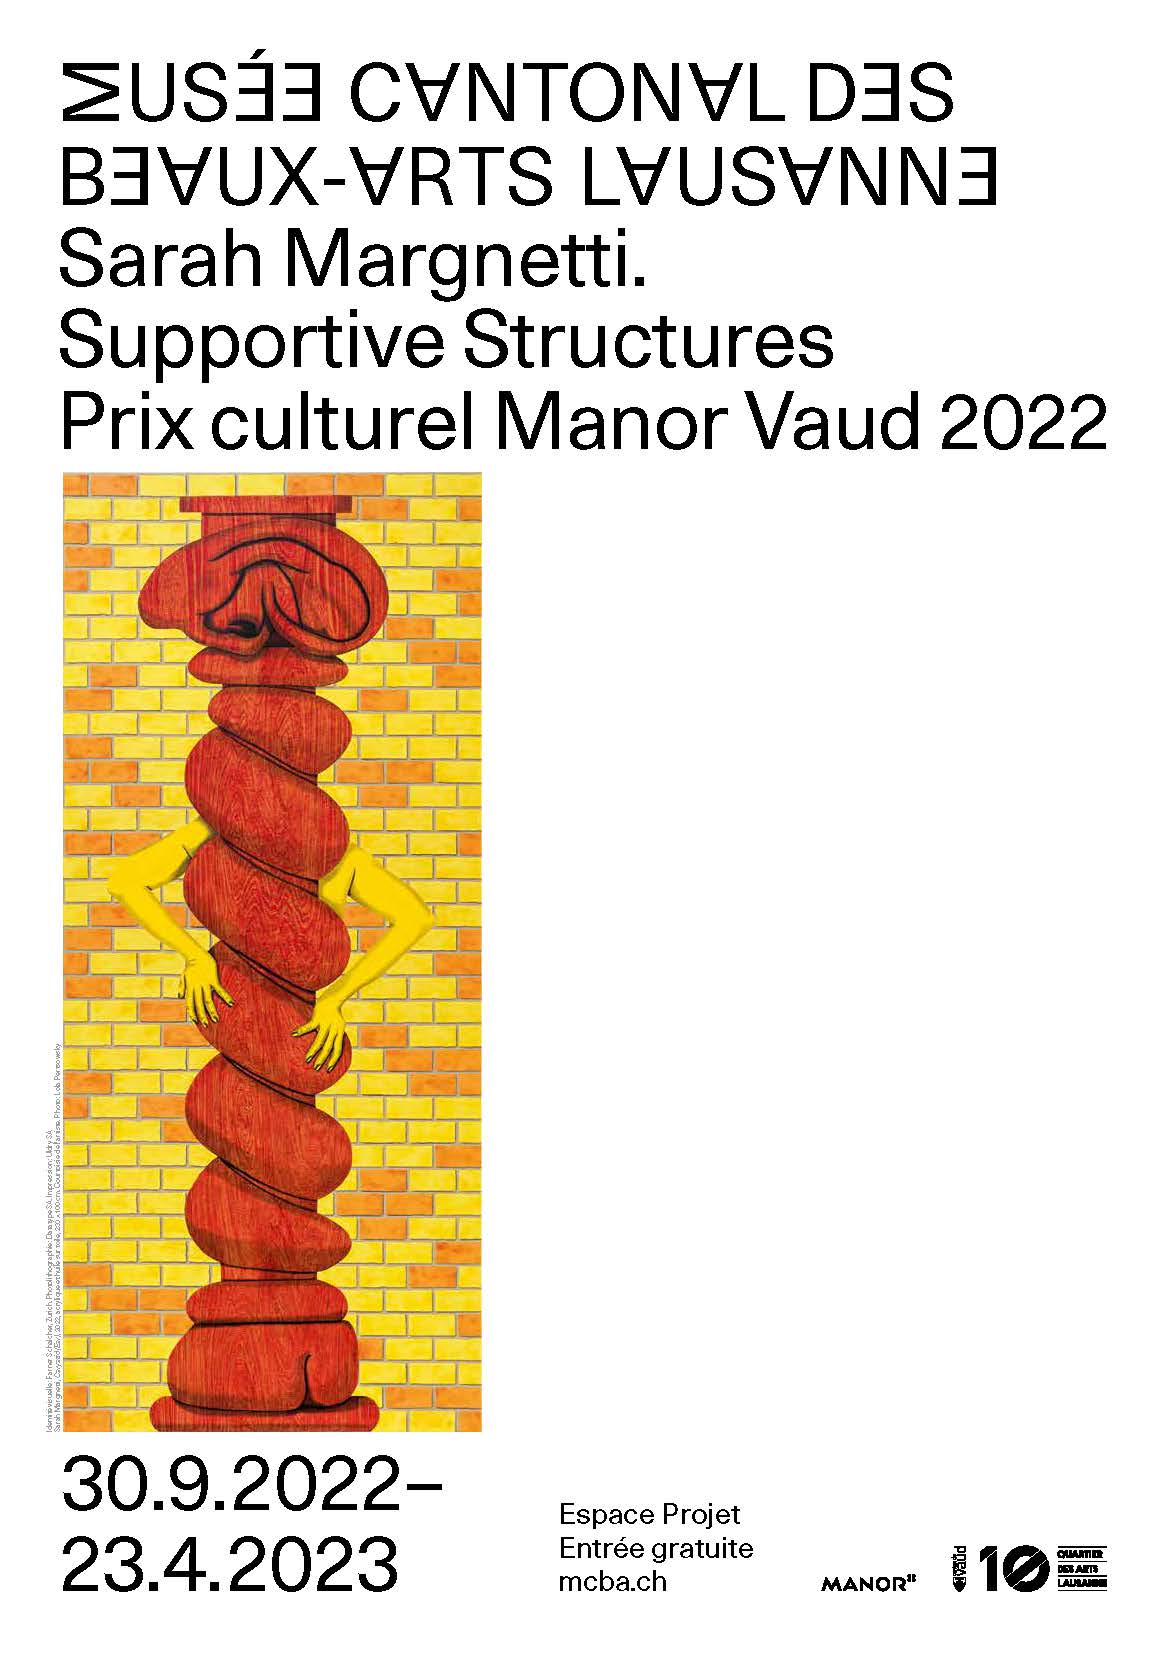 Sarah Margnetti. Supportive Structures (Prix Culturel Manor Vaud 2022)